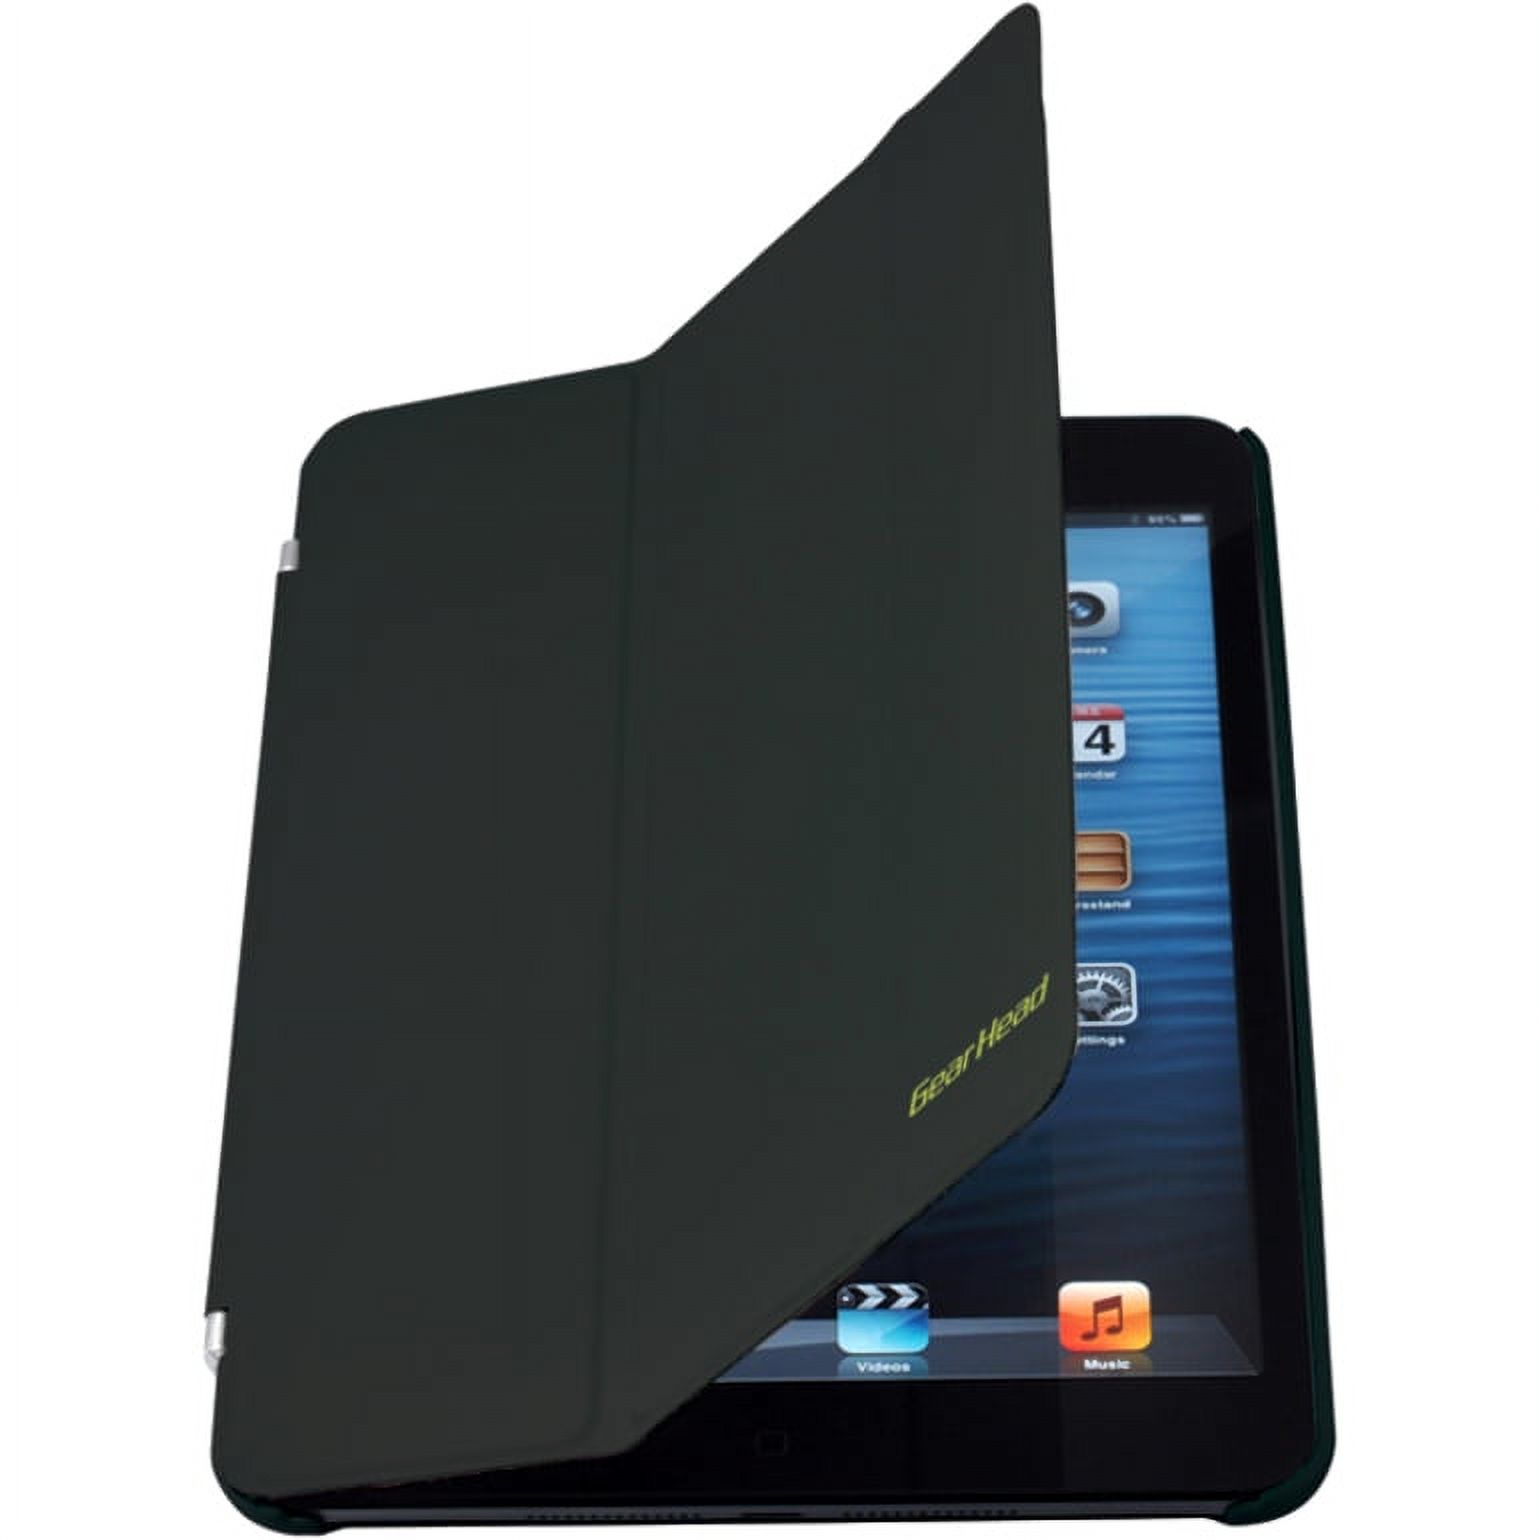 Gear Head FS3100BLK Carrying Case (Portfolio) Apple iPad mini Tablet, Black - image 1 of 3